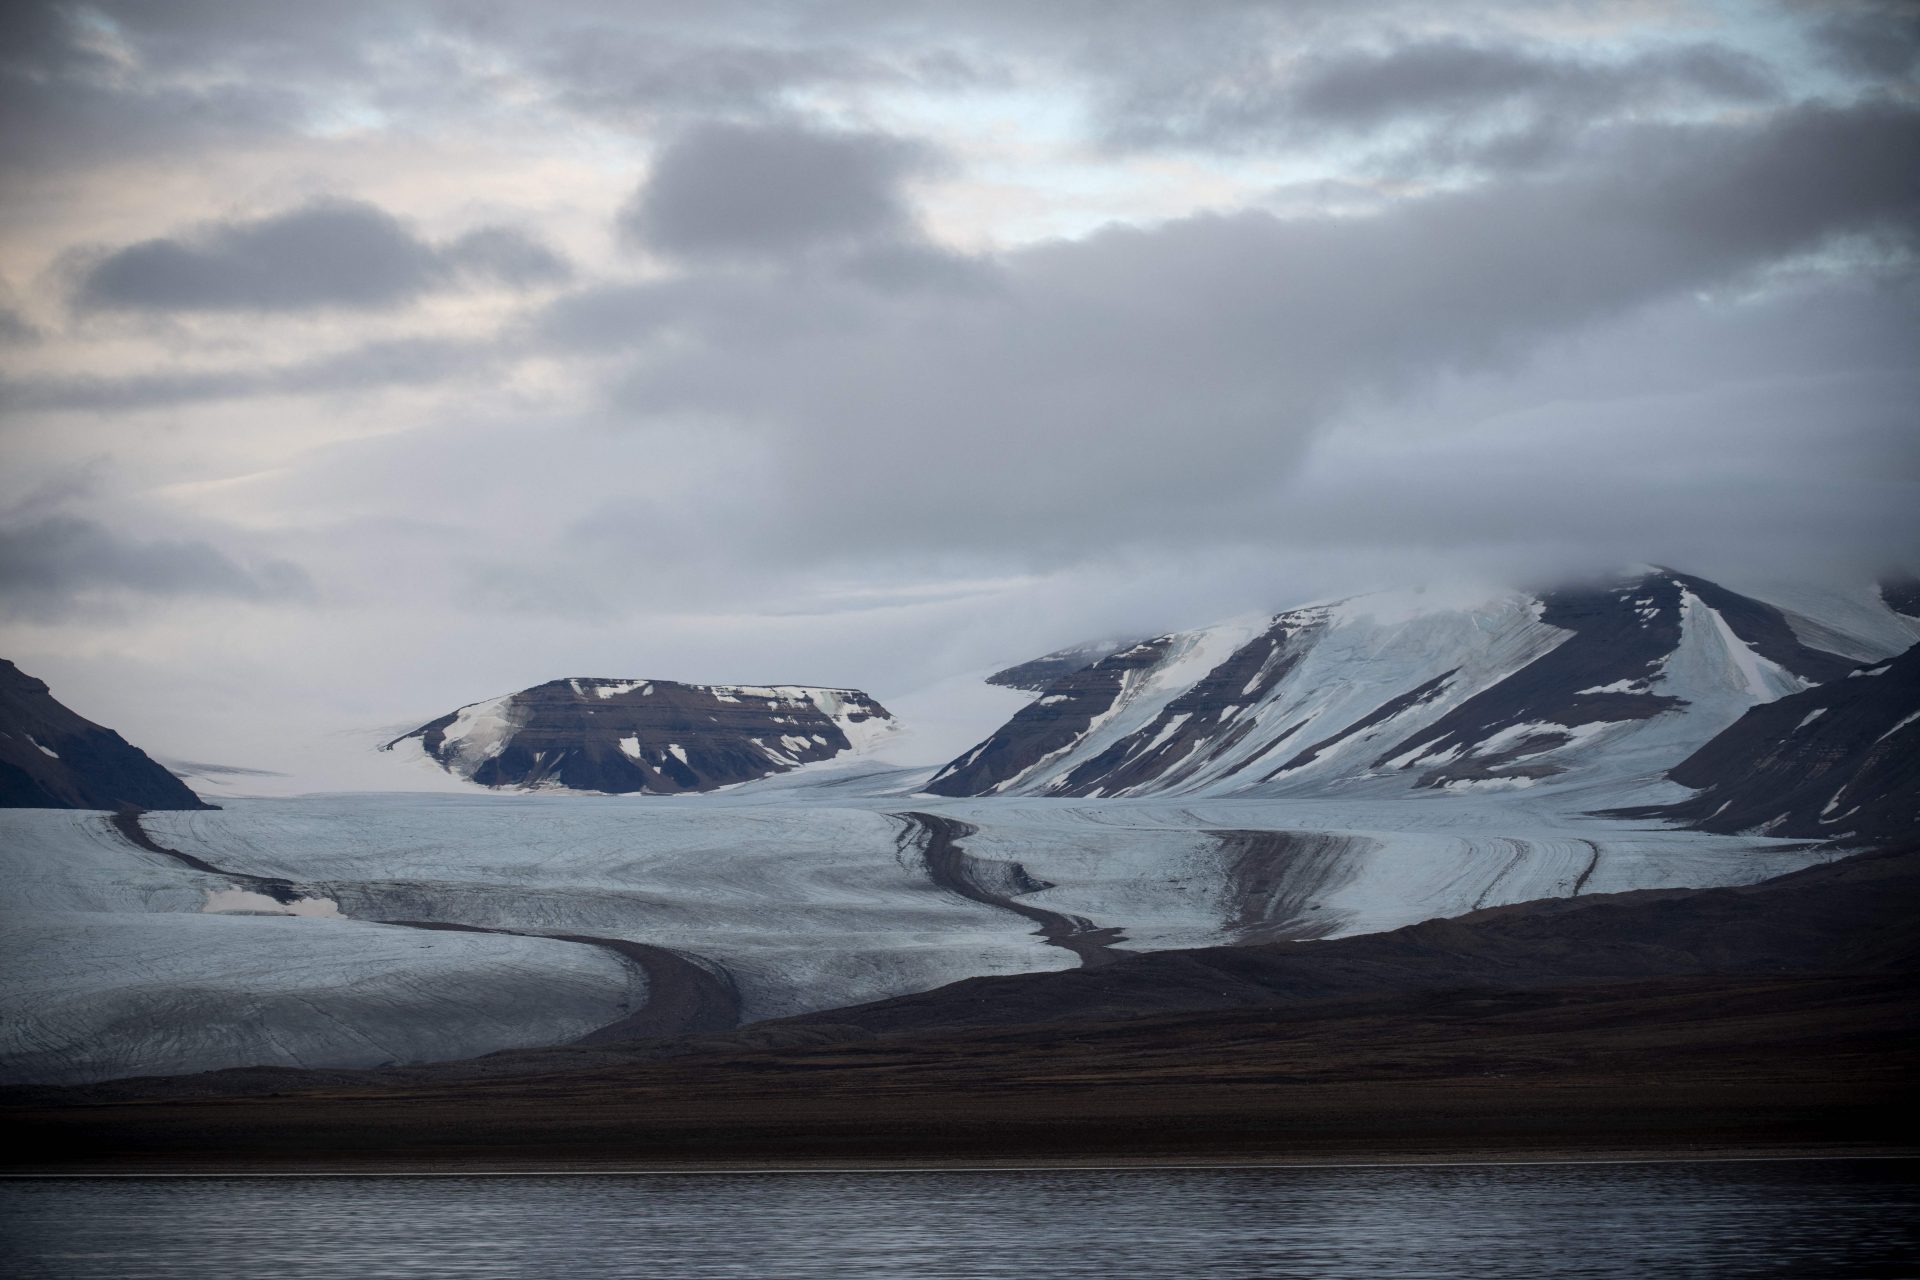 The Svalbard Treaty